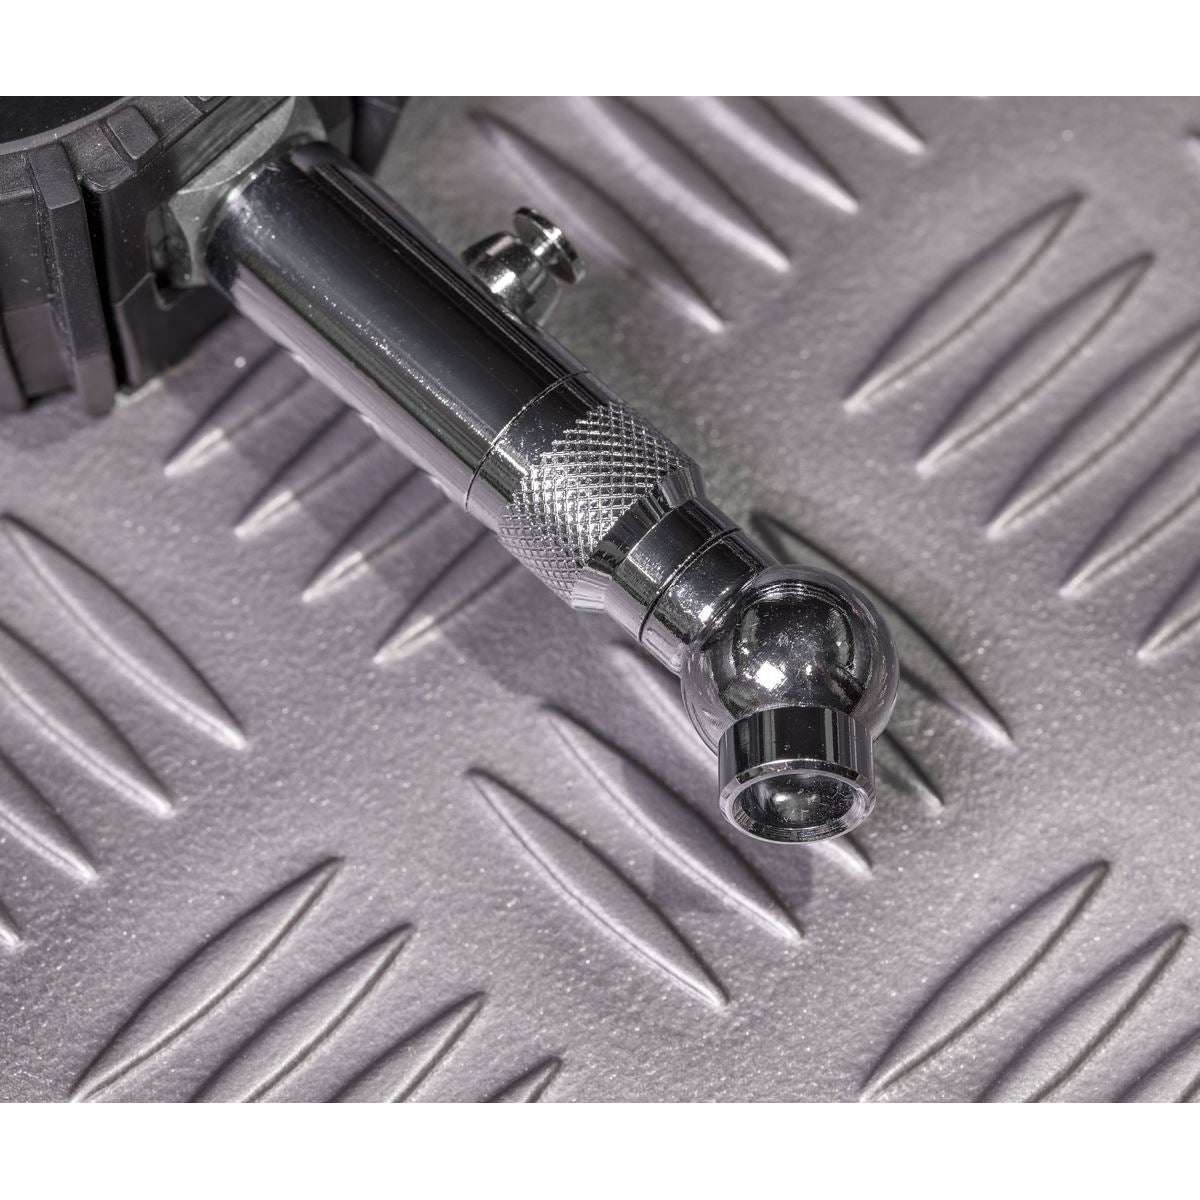 Sealey Digital Tyre Pressure Gauge with Swivel Head & Quick Release